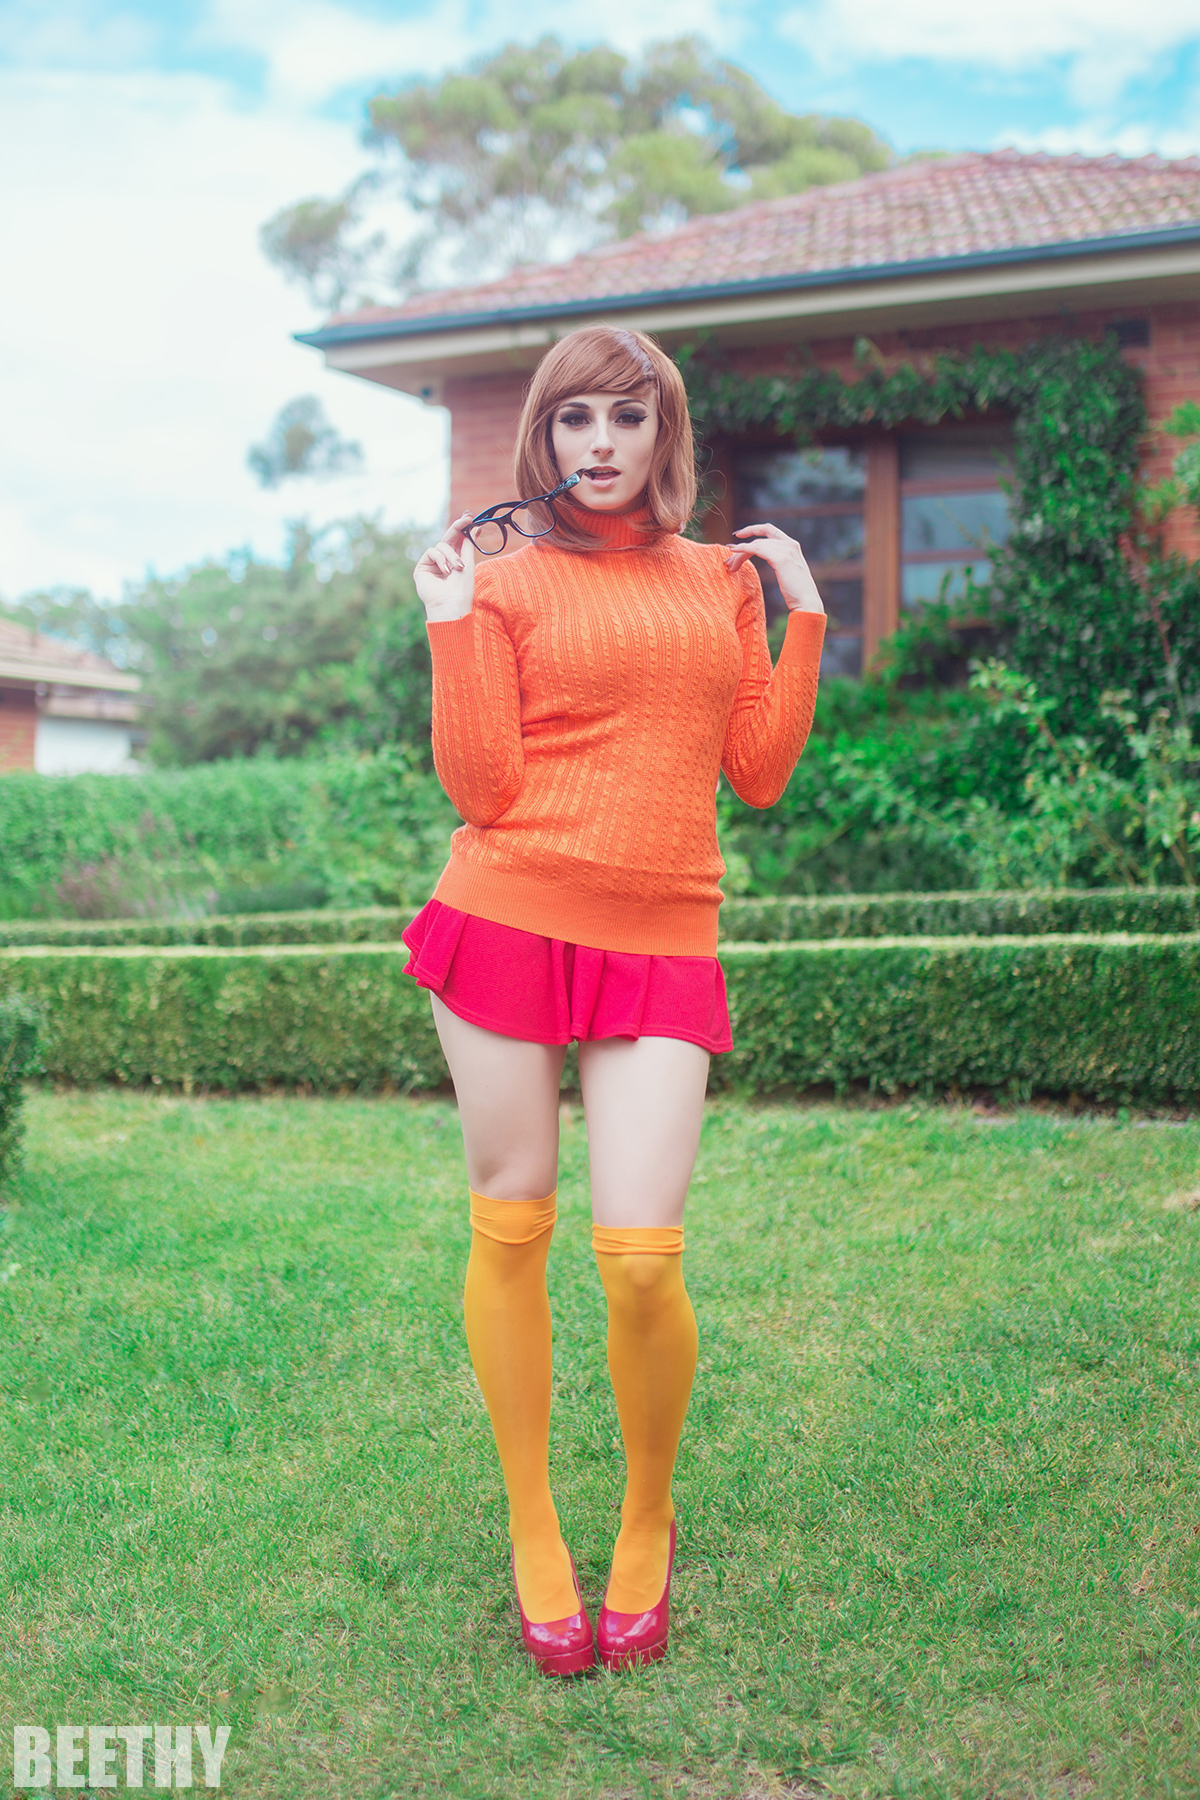 Velma - Scooby Doo by beethy on DeviantArt